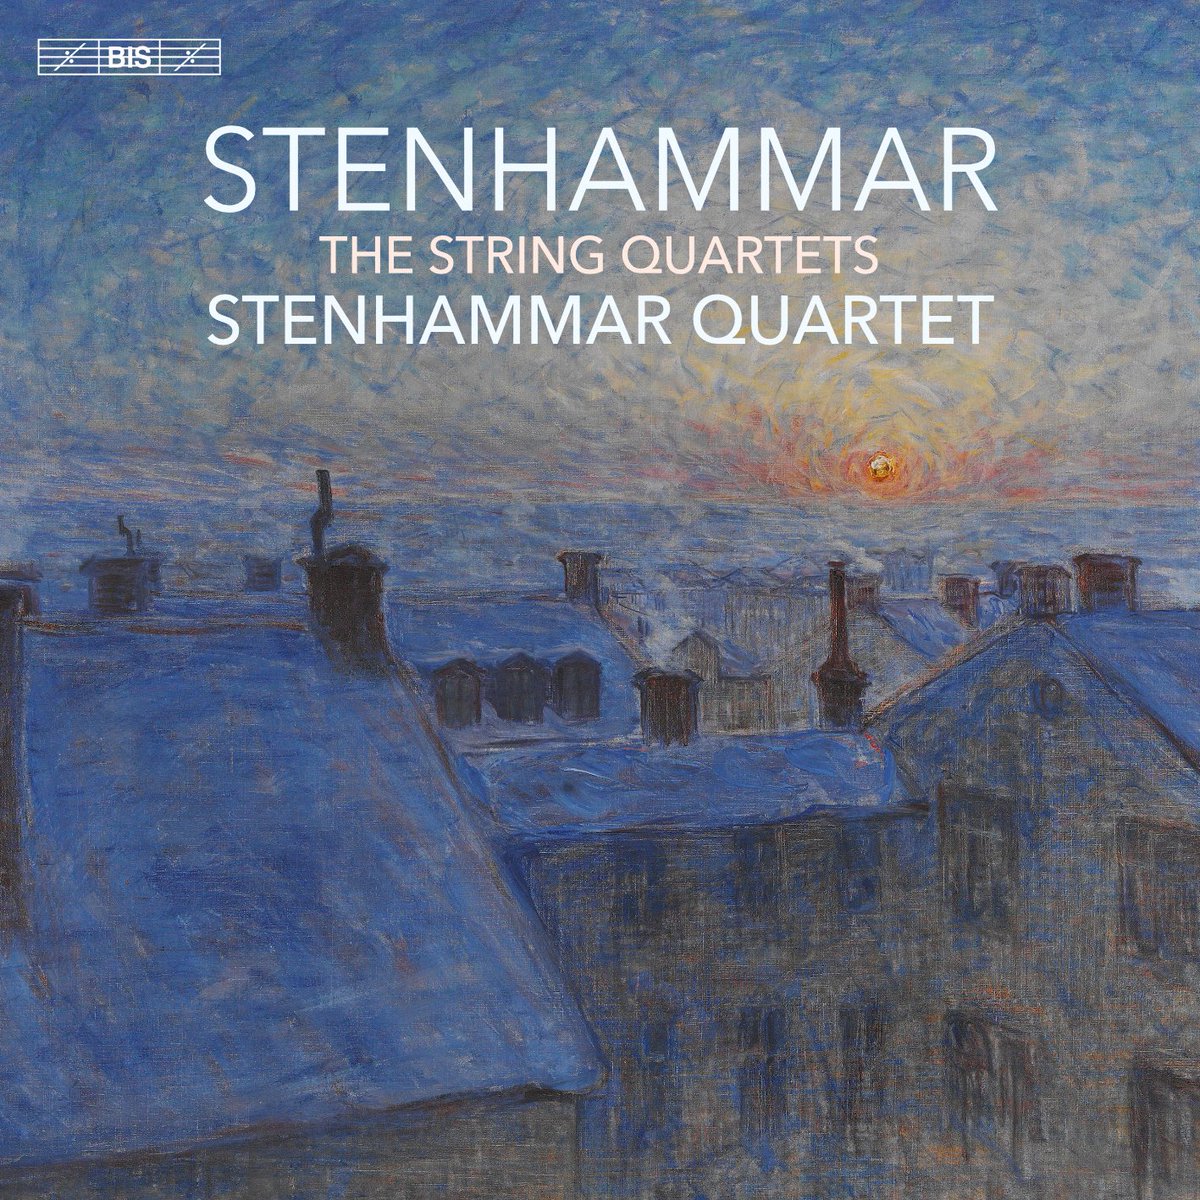 Next up we have “Stenhammar: The String Quartets” performed by the Stenhammer Quartet. A new release on BIS. @BIS_records